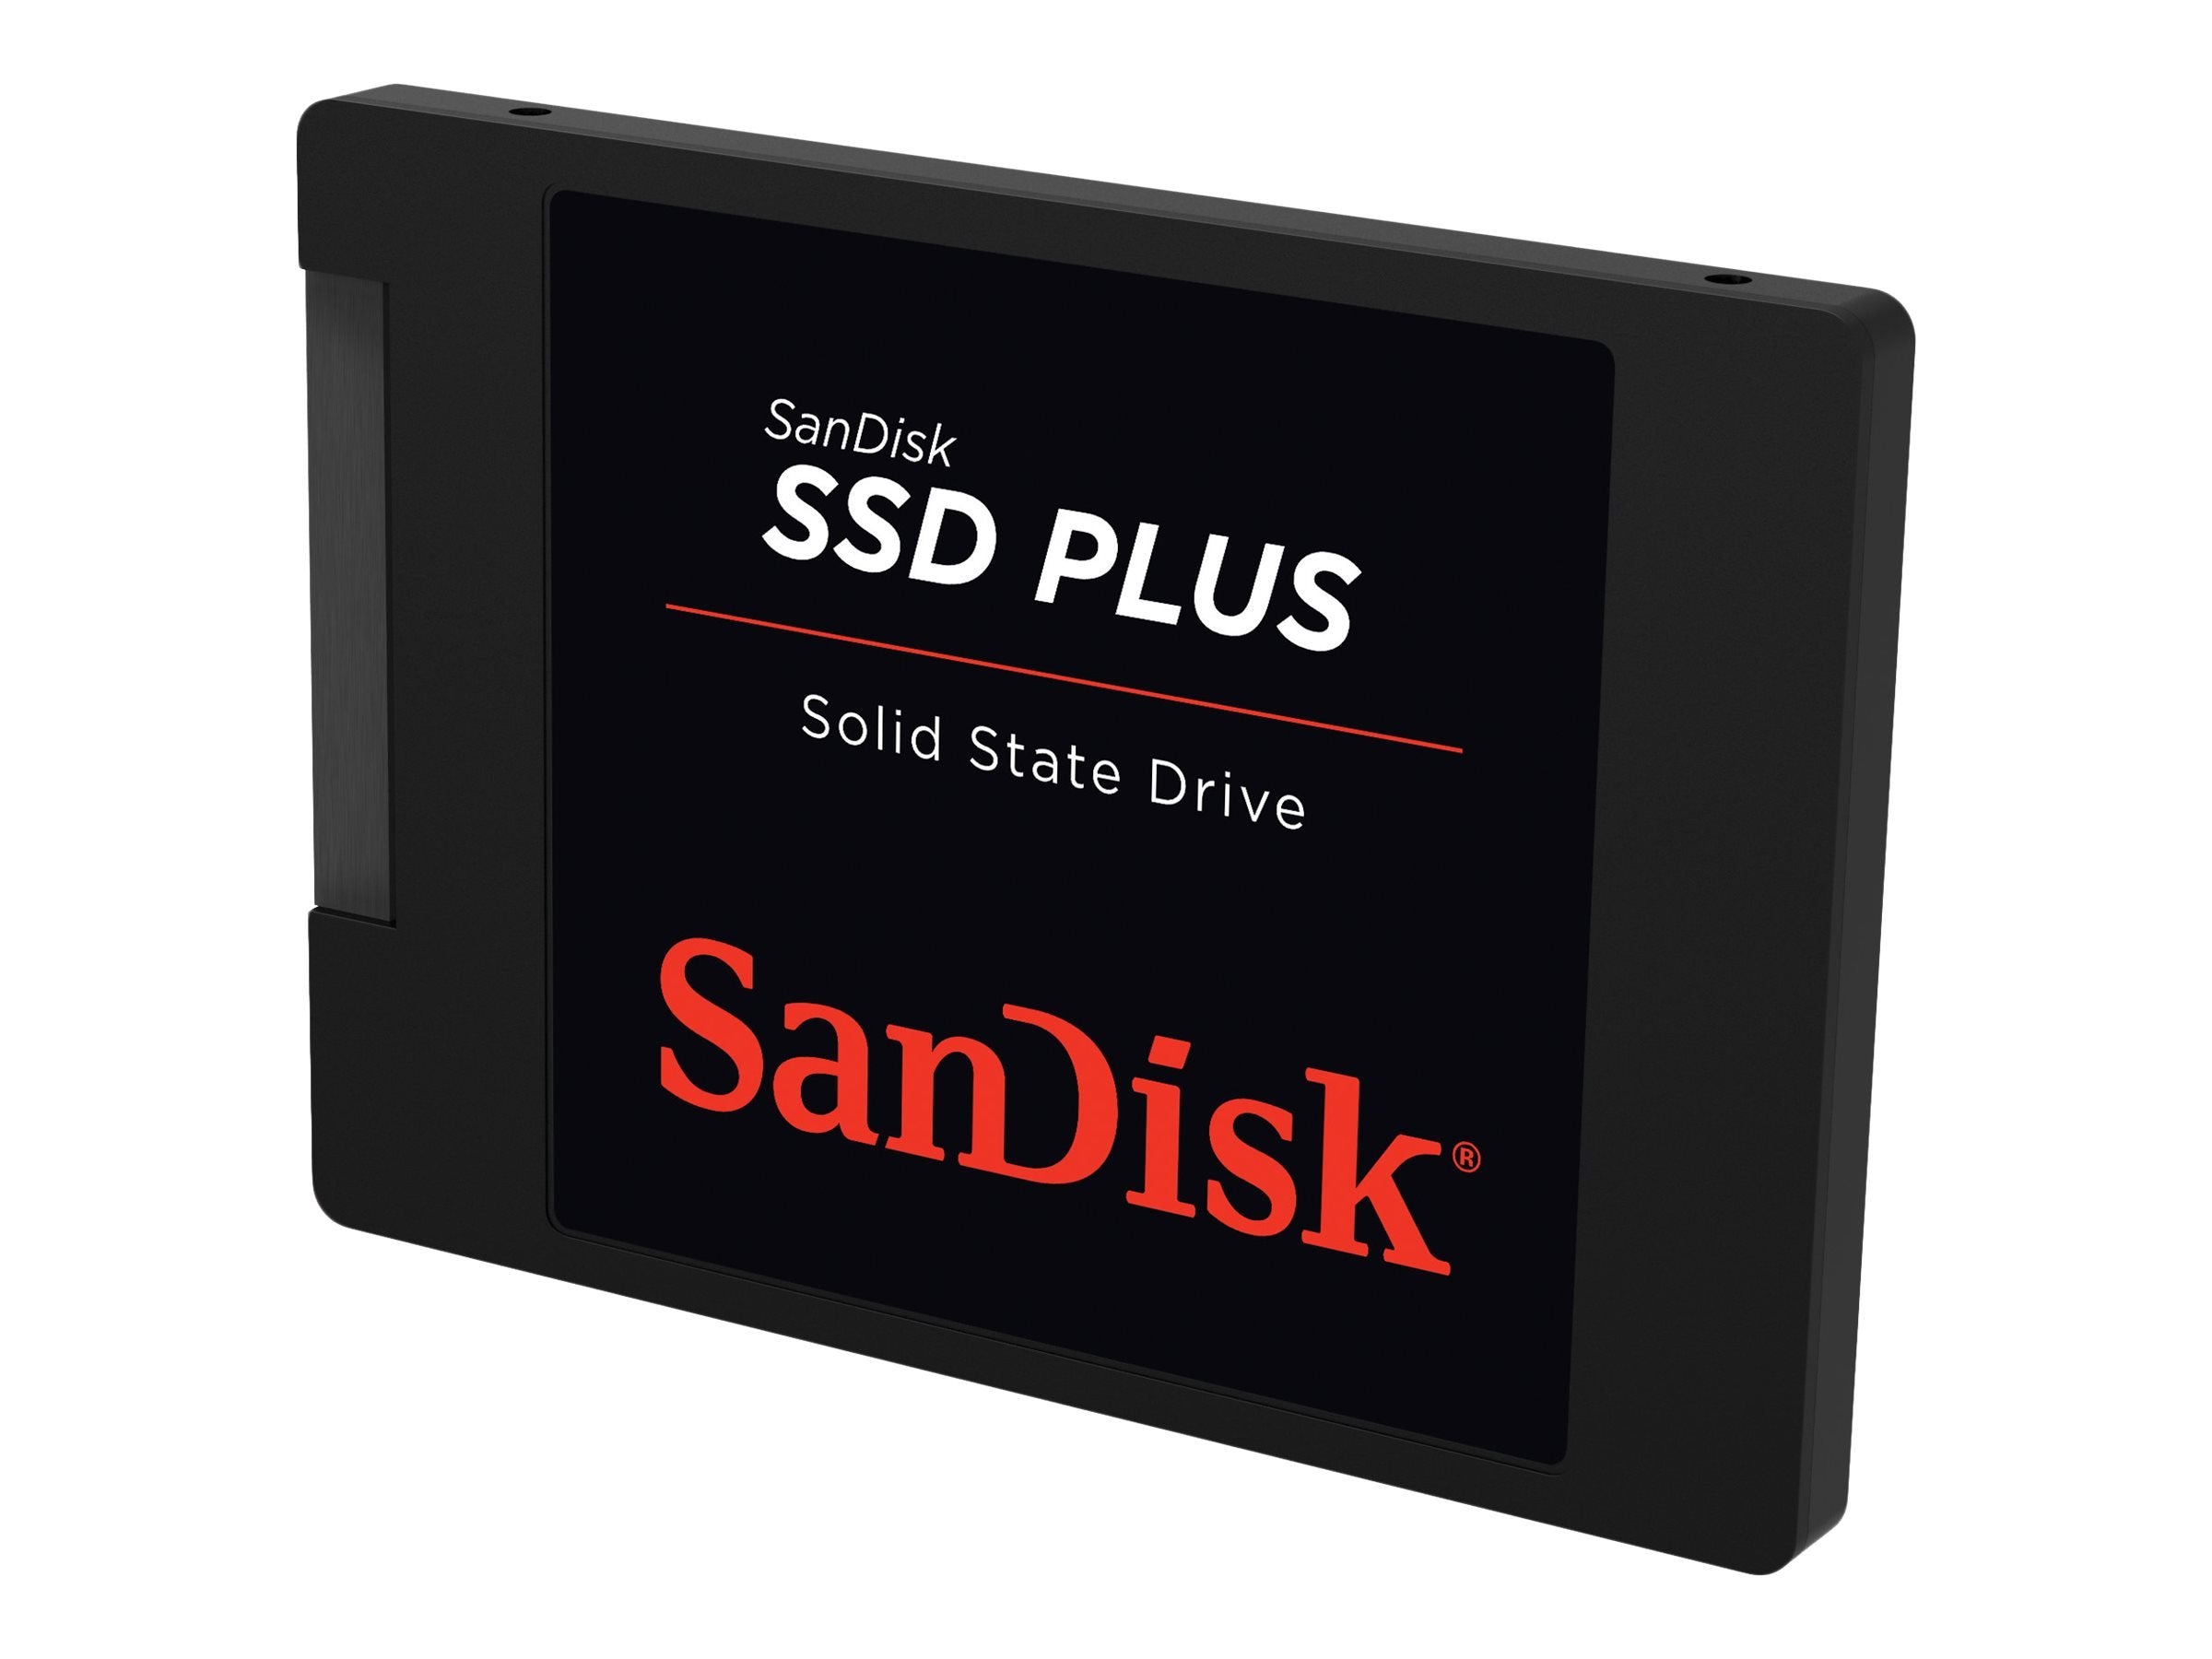 SanDisk 480GB SSD PLUS 2.5" SATA III Internal Solid State Drive SDSSDA-480G (OPEN BOX)